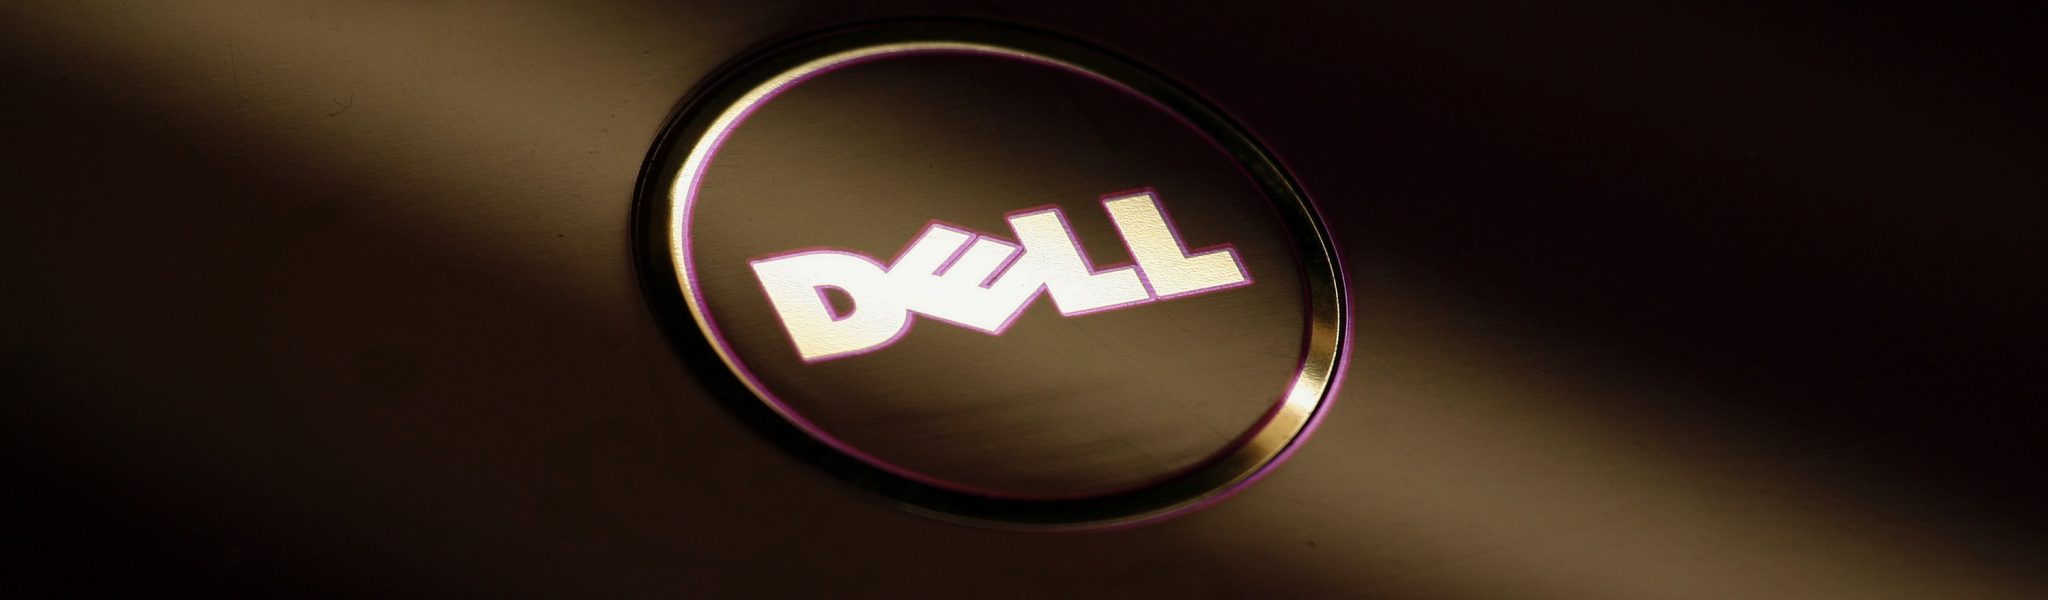 Dell junta-se à HP, Microsoft, SAP e IBM e também despede